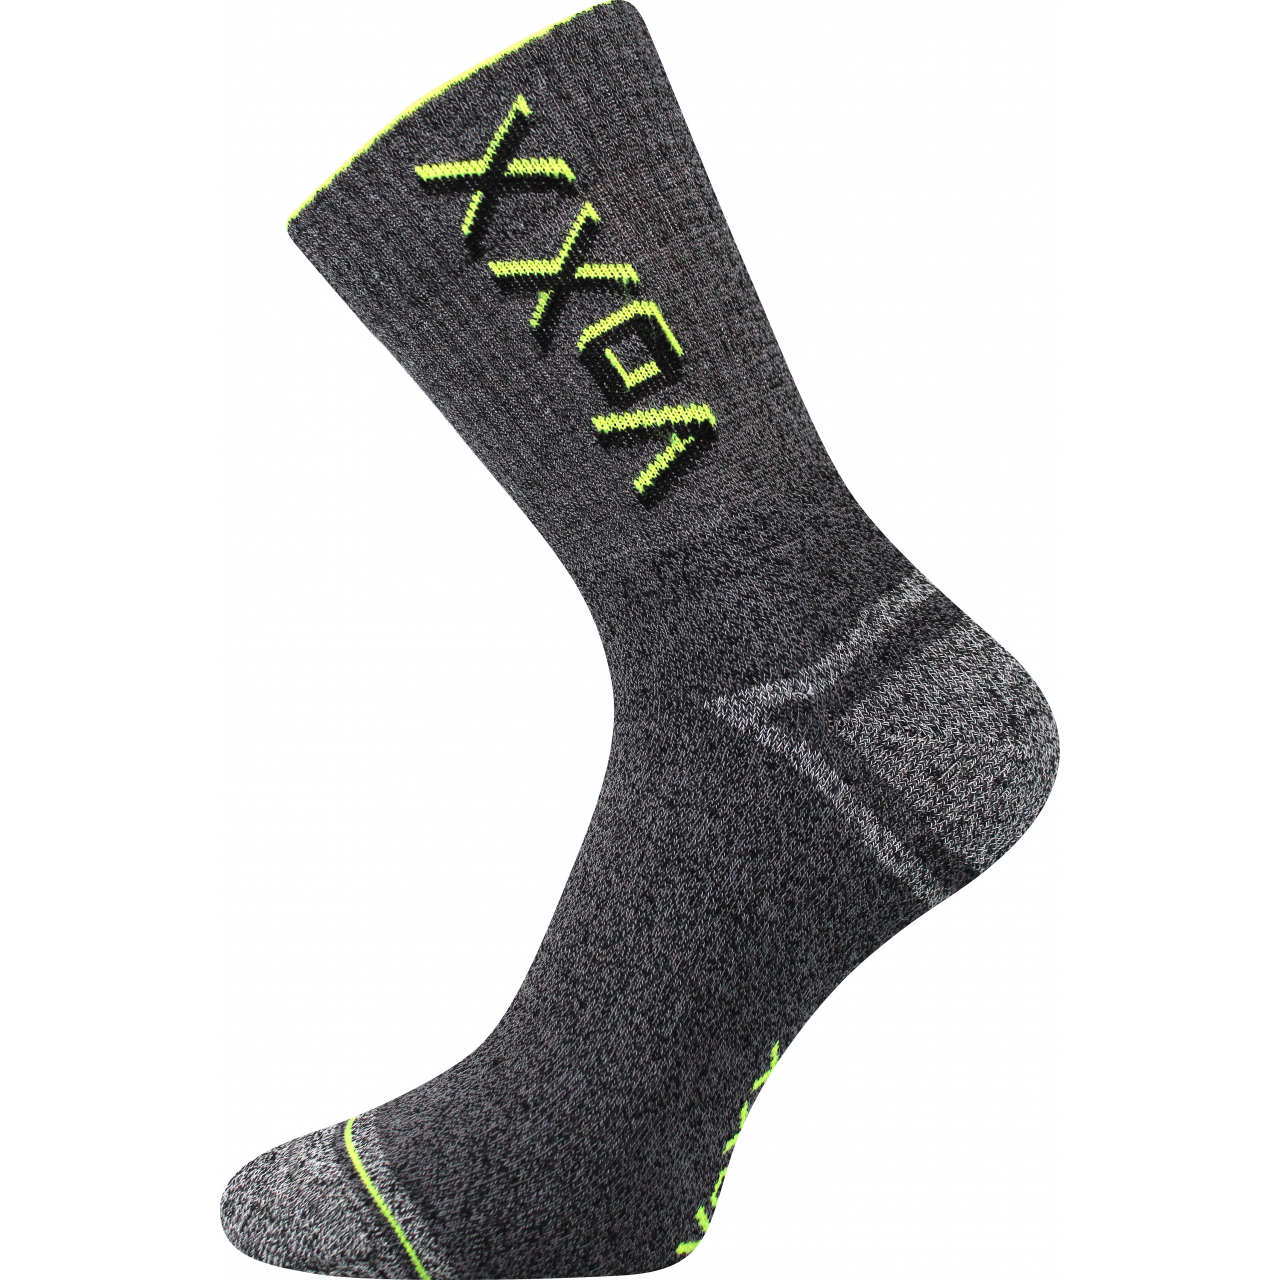 Ponožky unisex froté Voxx Hawk - šedé-žluté, 43-46